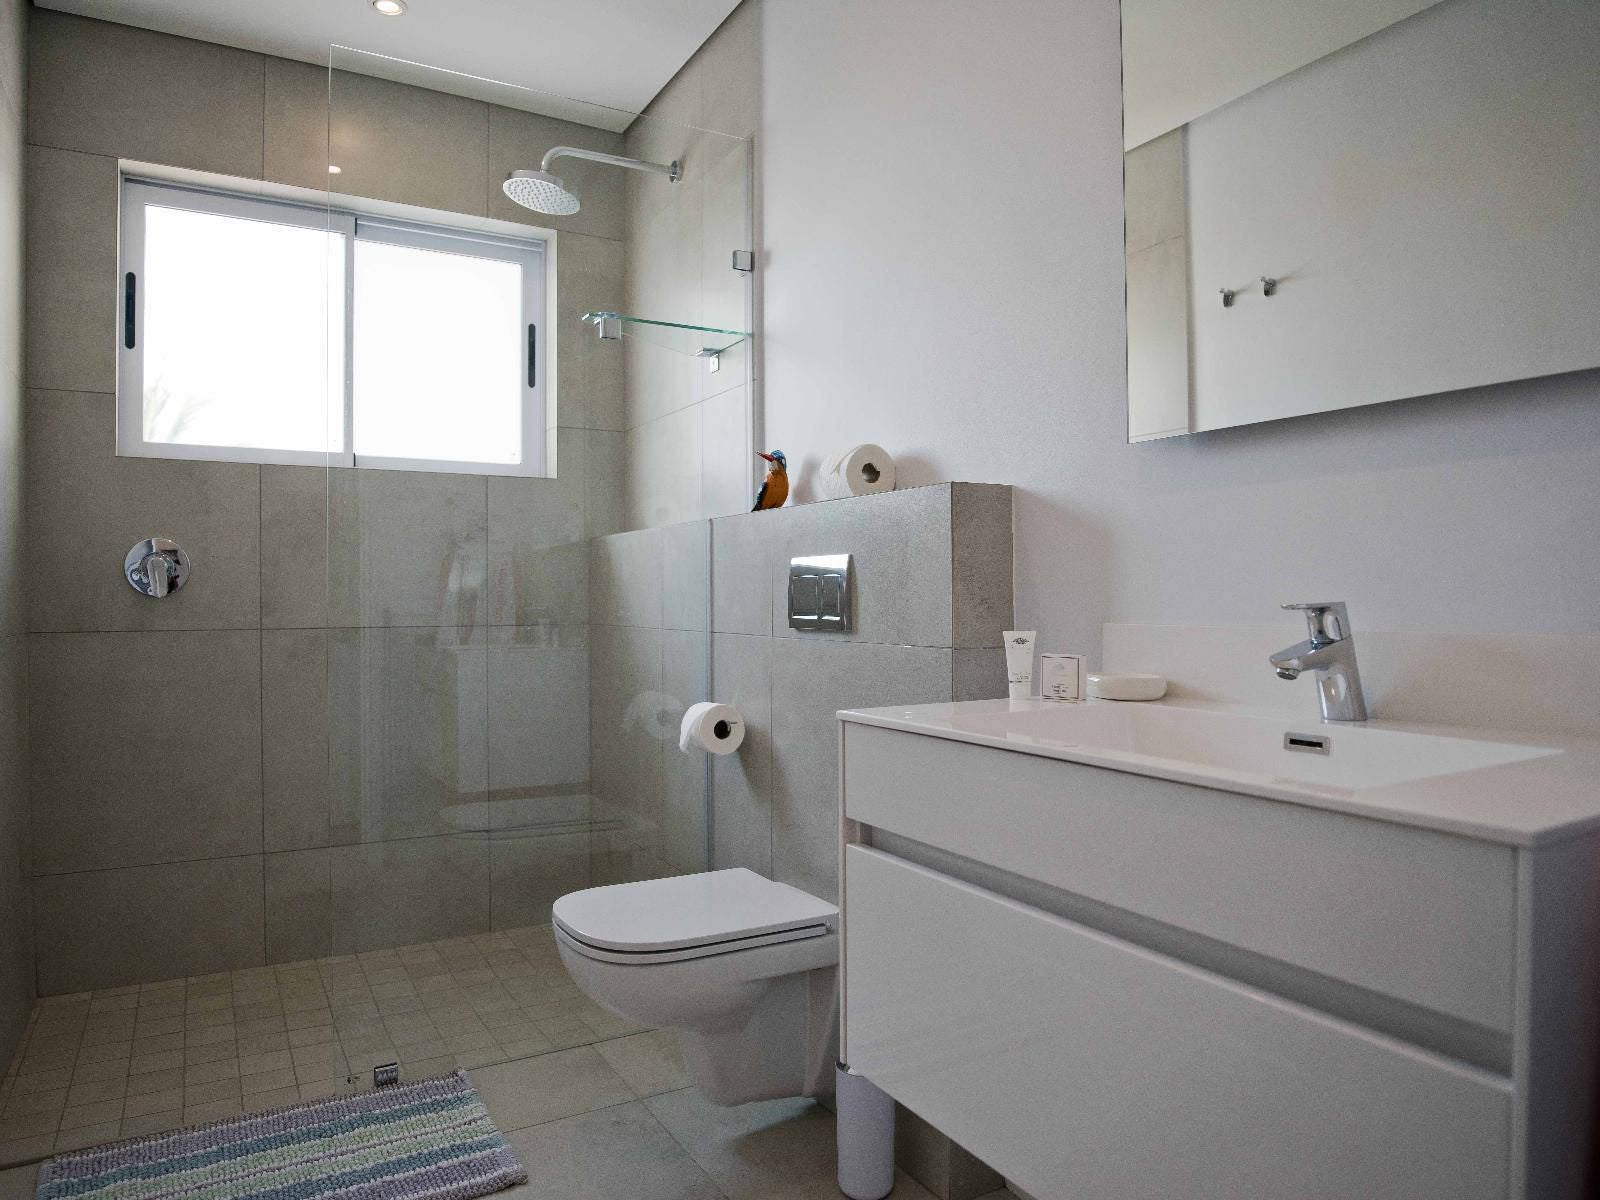 Umdloti Holiday Resort Apartments Selection Beach Durban Kwazulu Natal South Africa Colorless, Bathroom